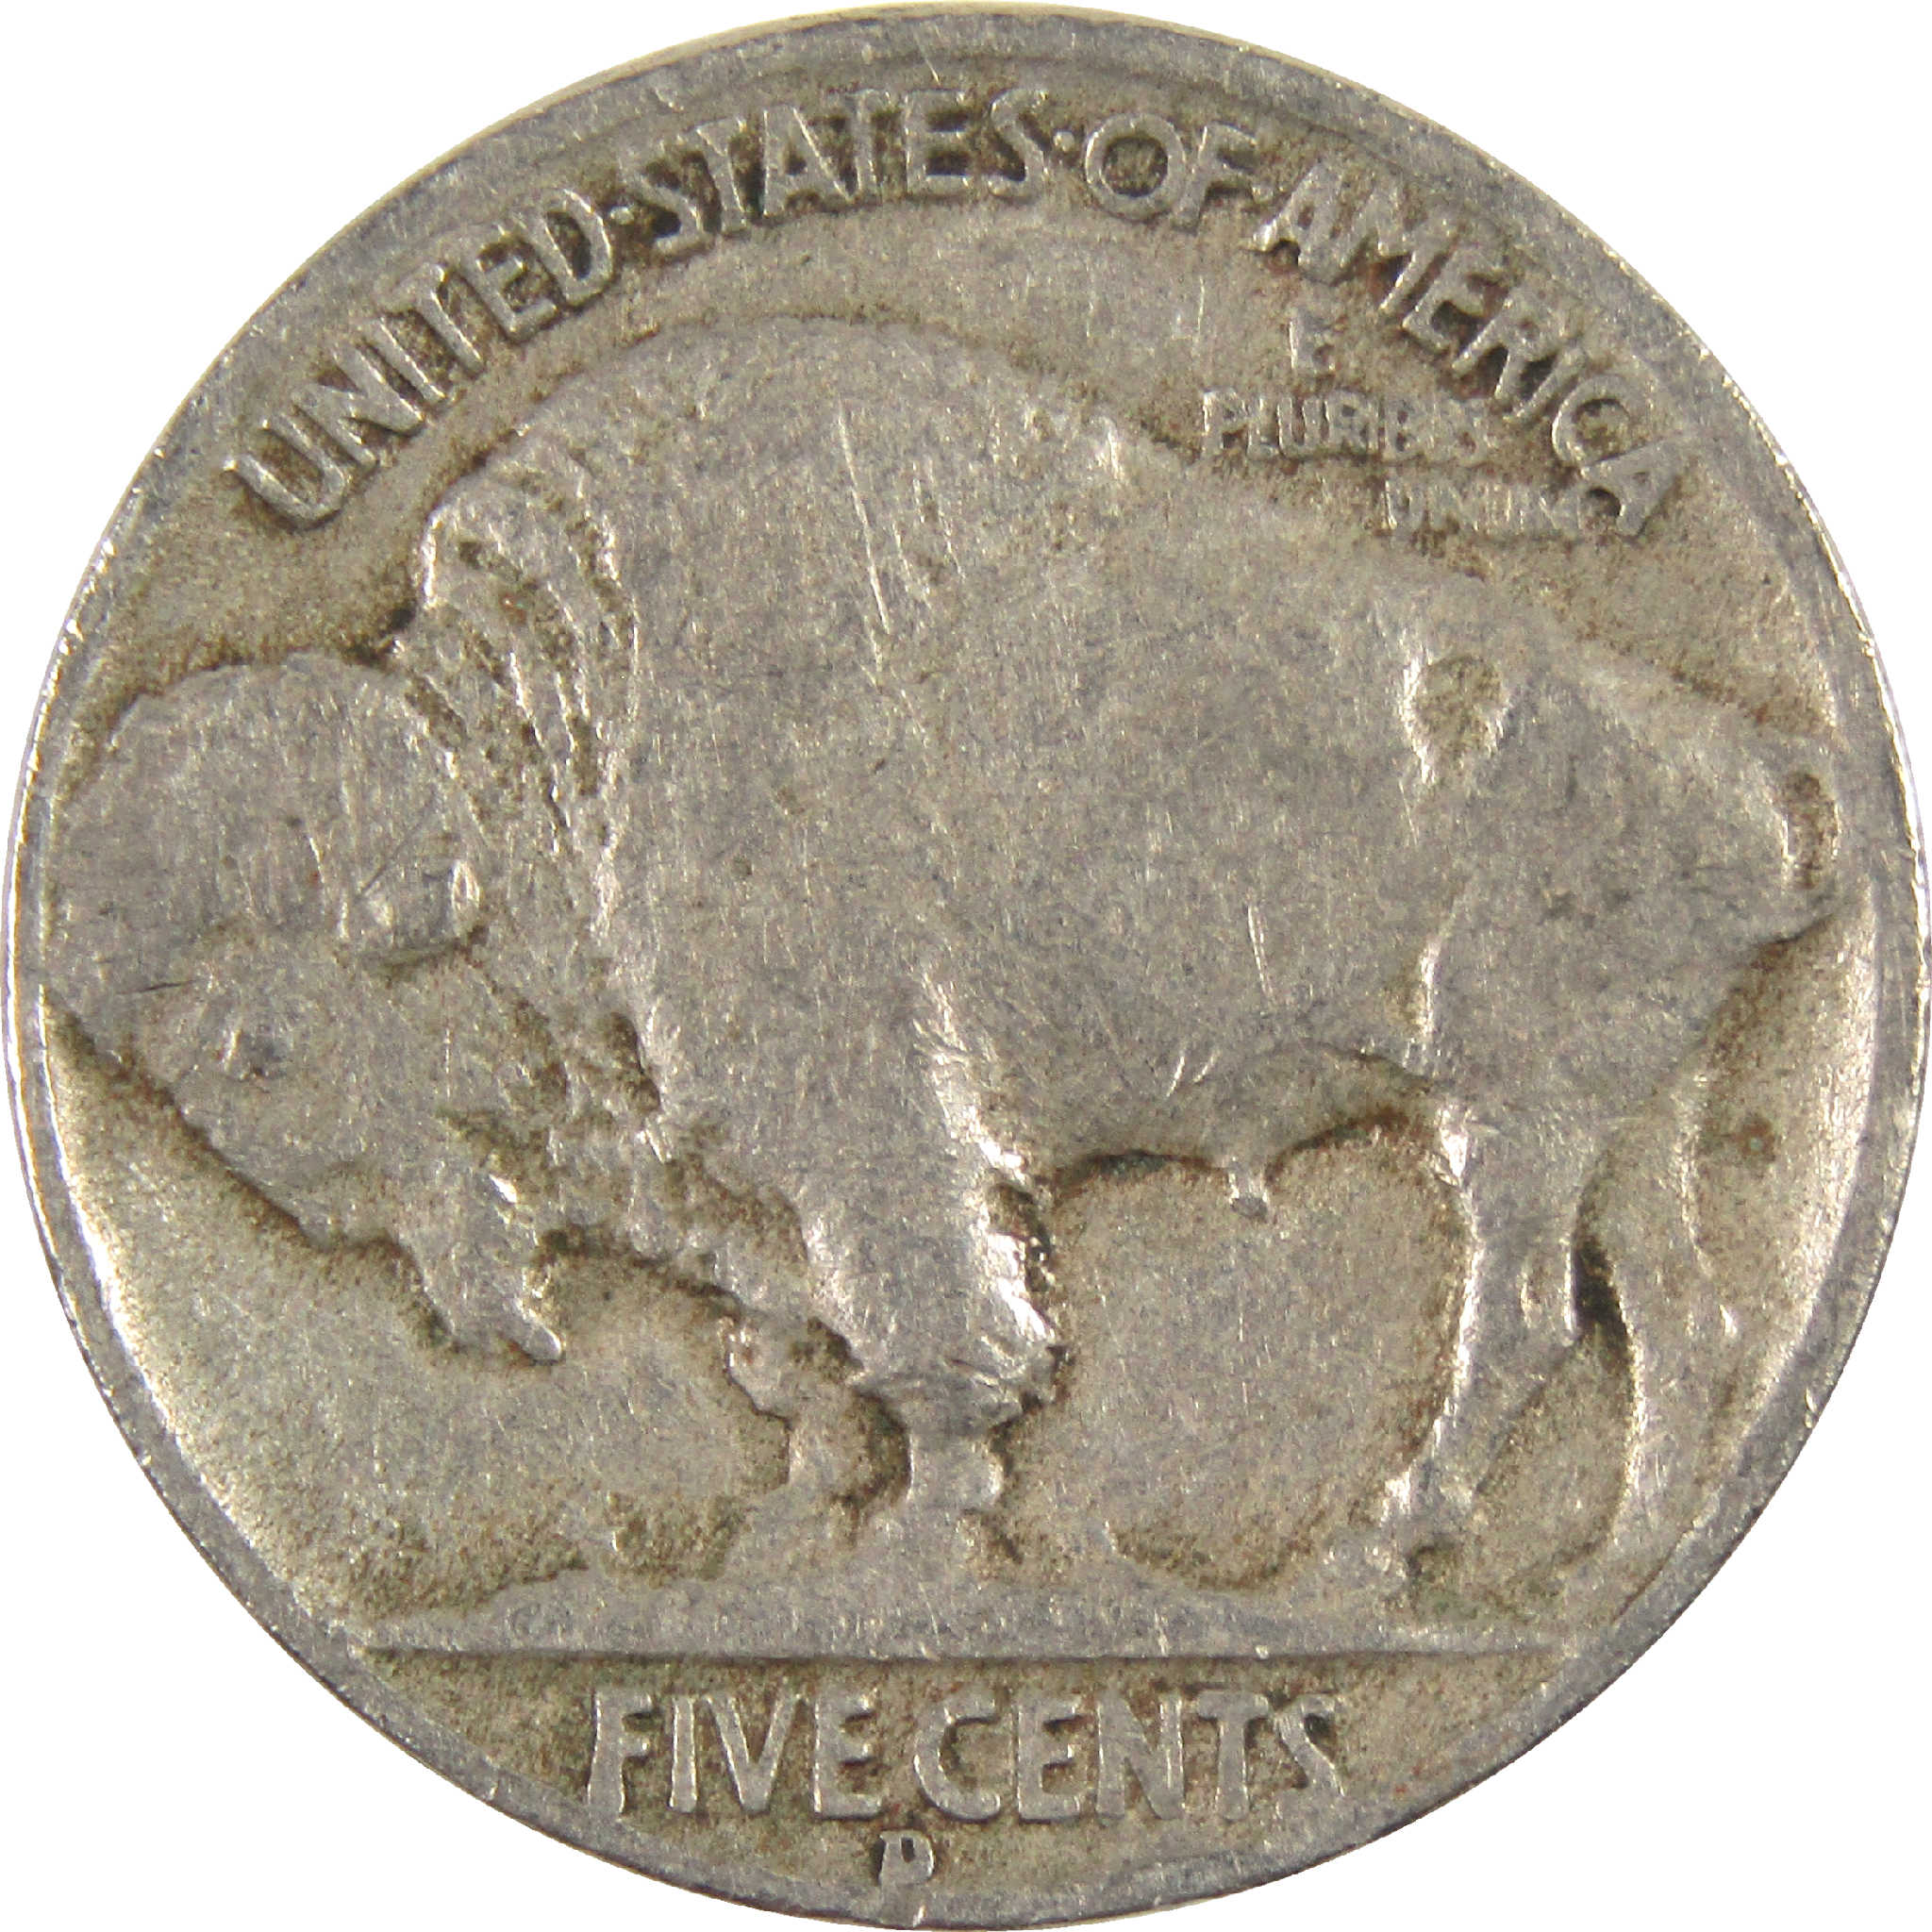 1937 D Indian Head Buffalo Nickel G Good 5c Coin